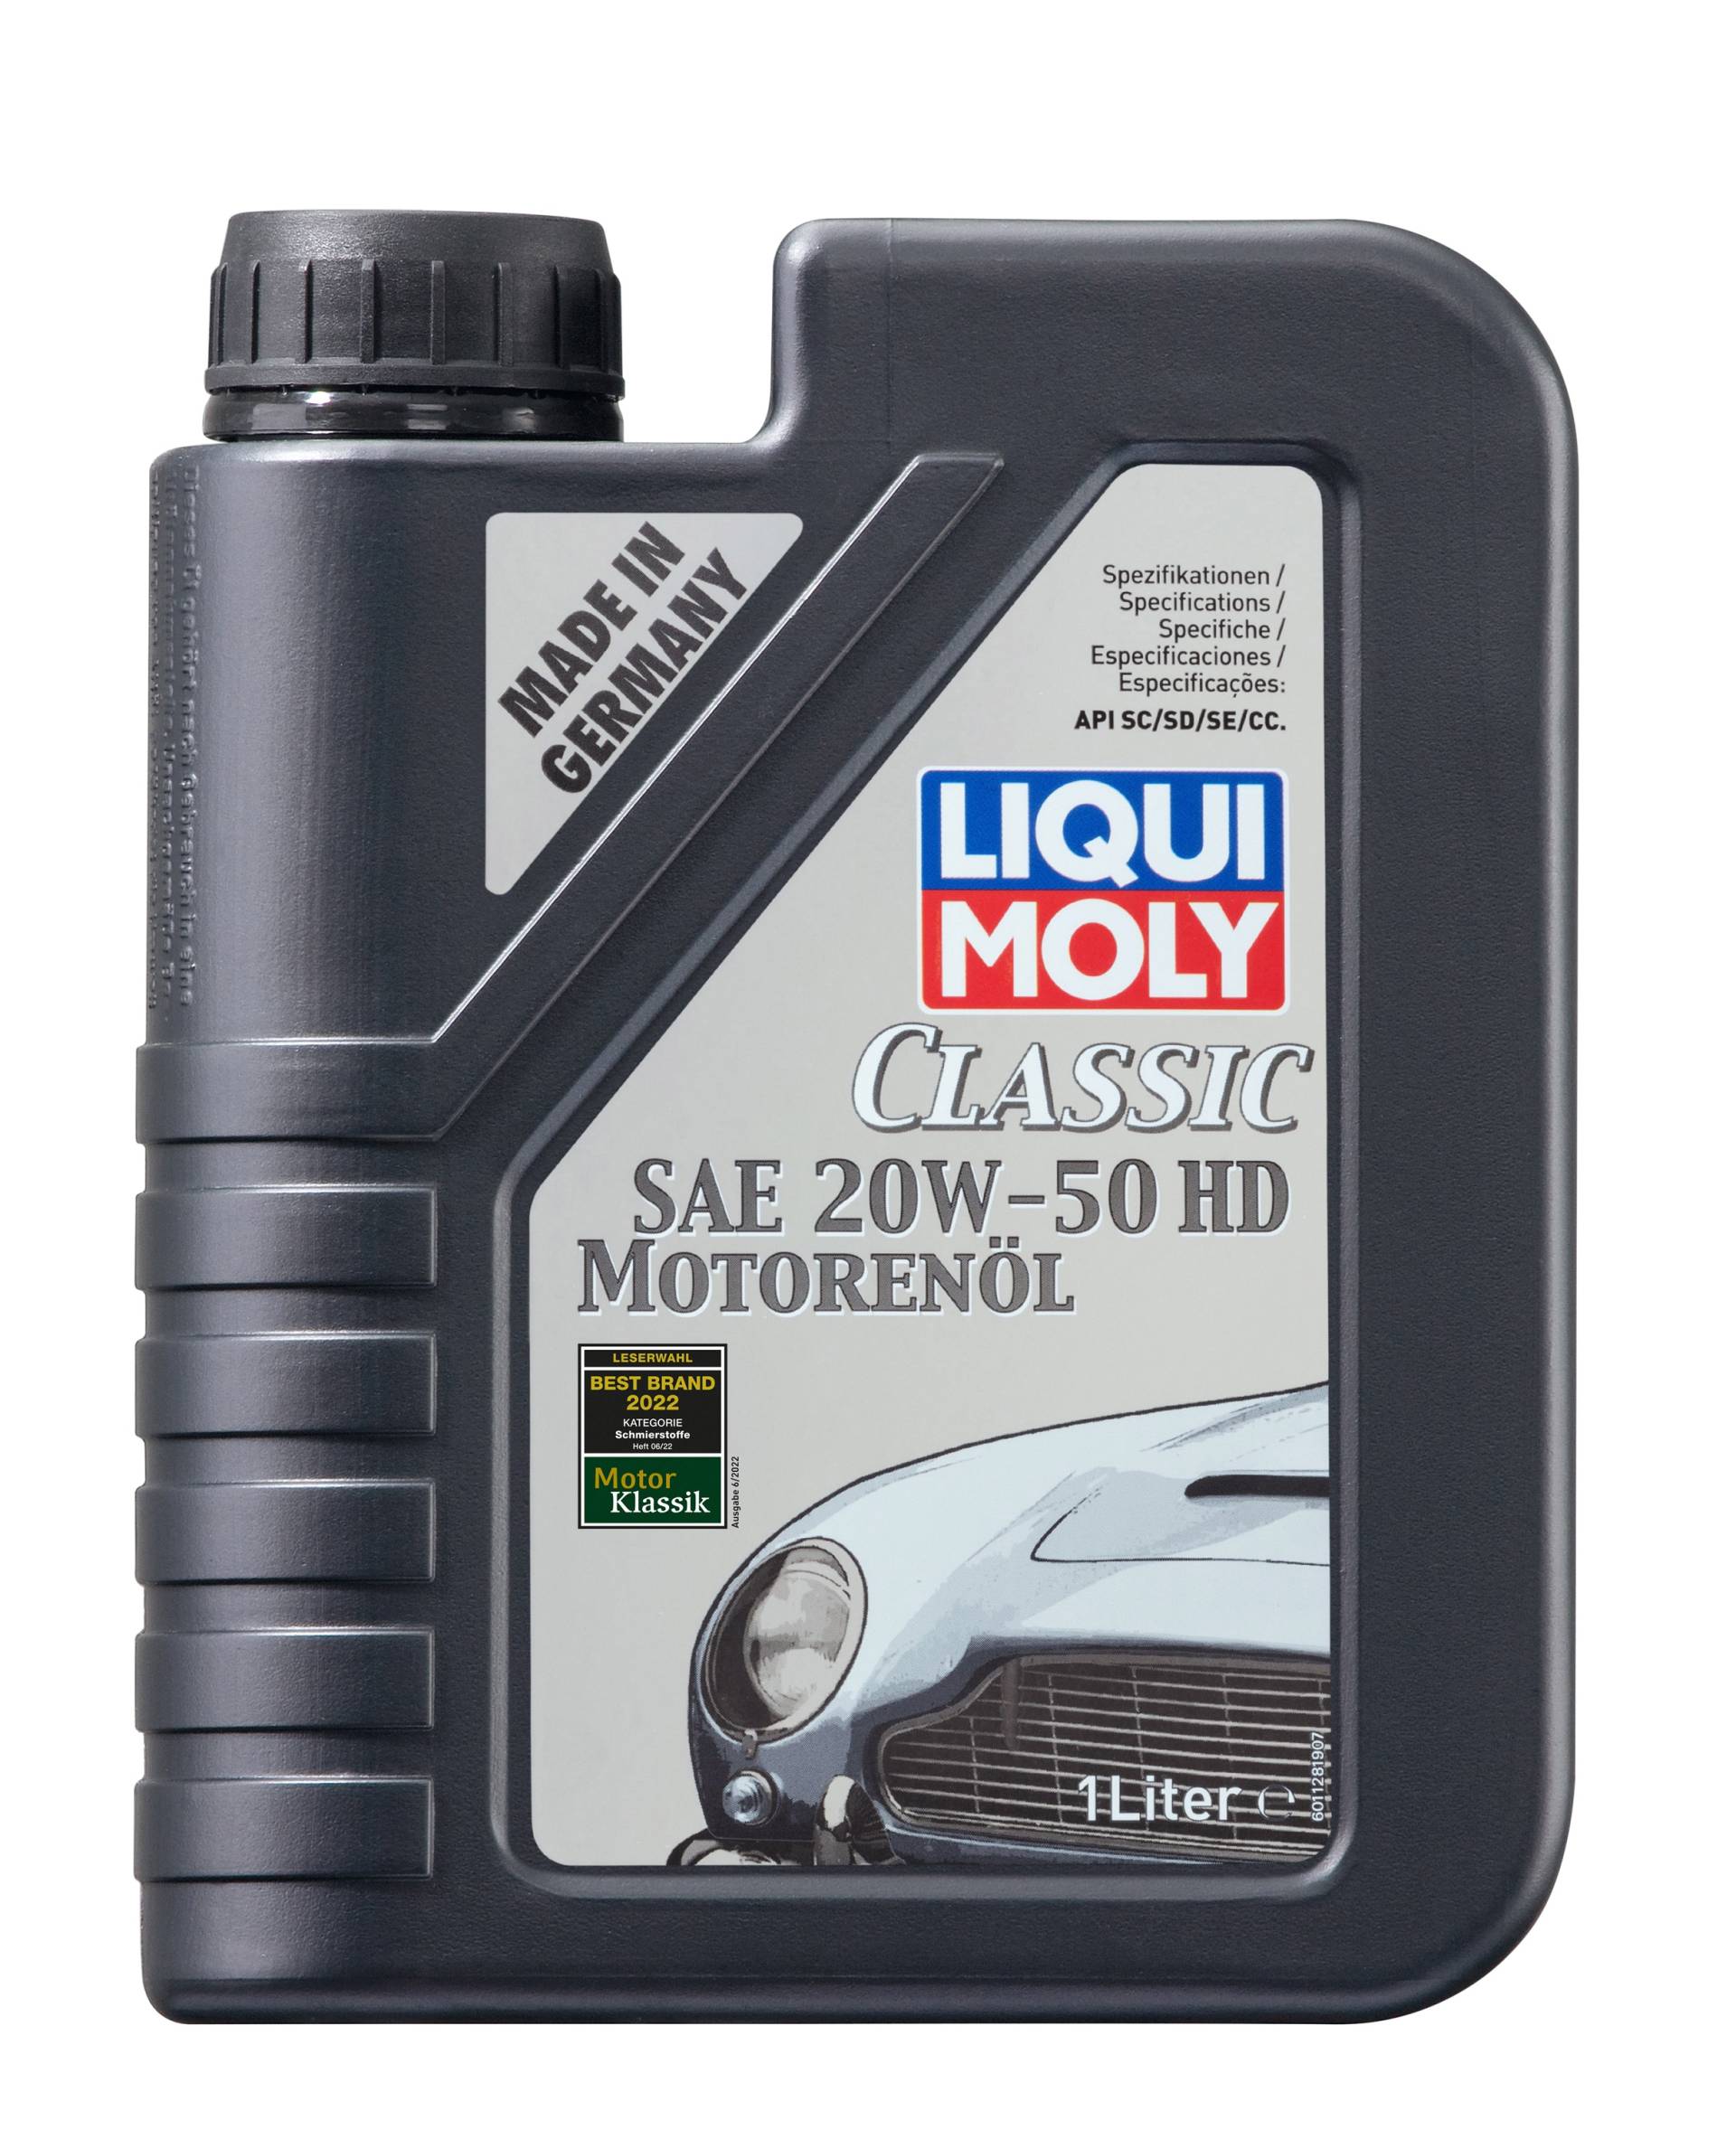 Liqui Moly Classic SAE 20W-50 HD Motoröl, 1 Liter von Liqui Moly